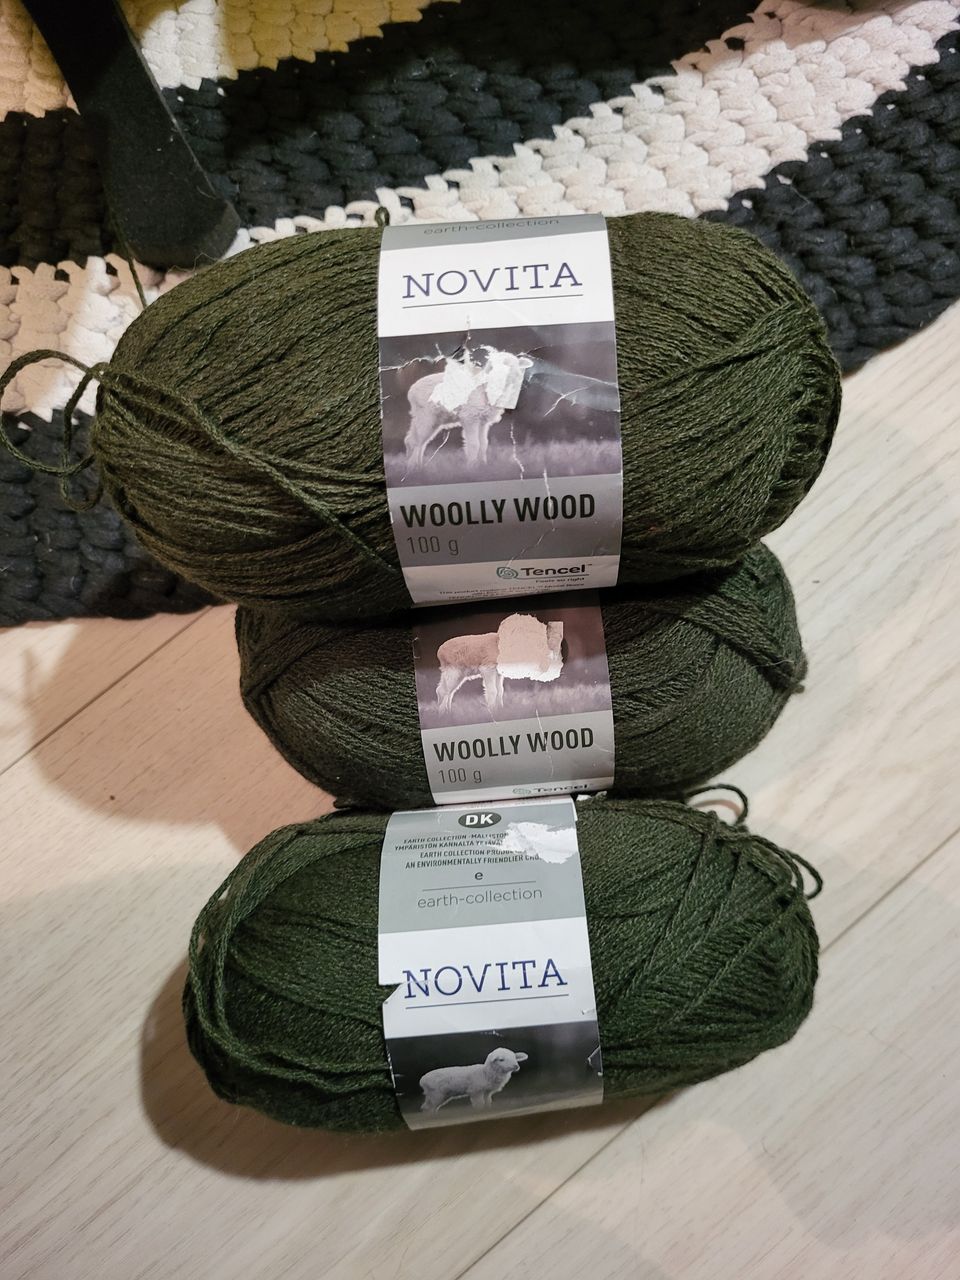 Novita woolly wood